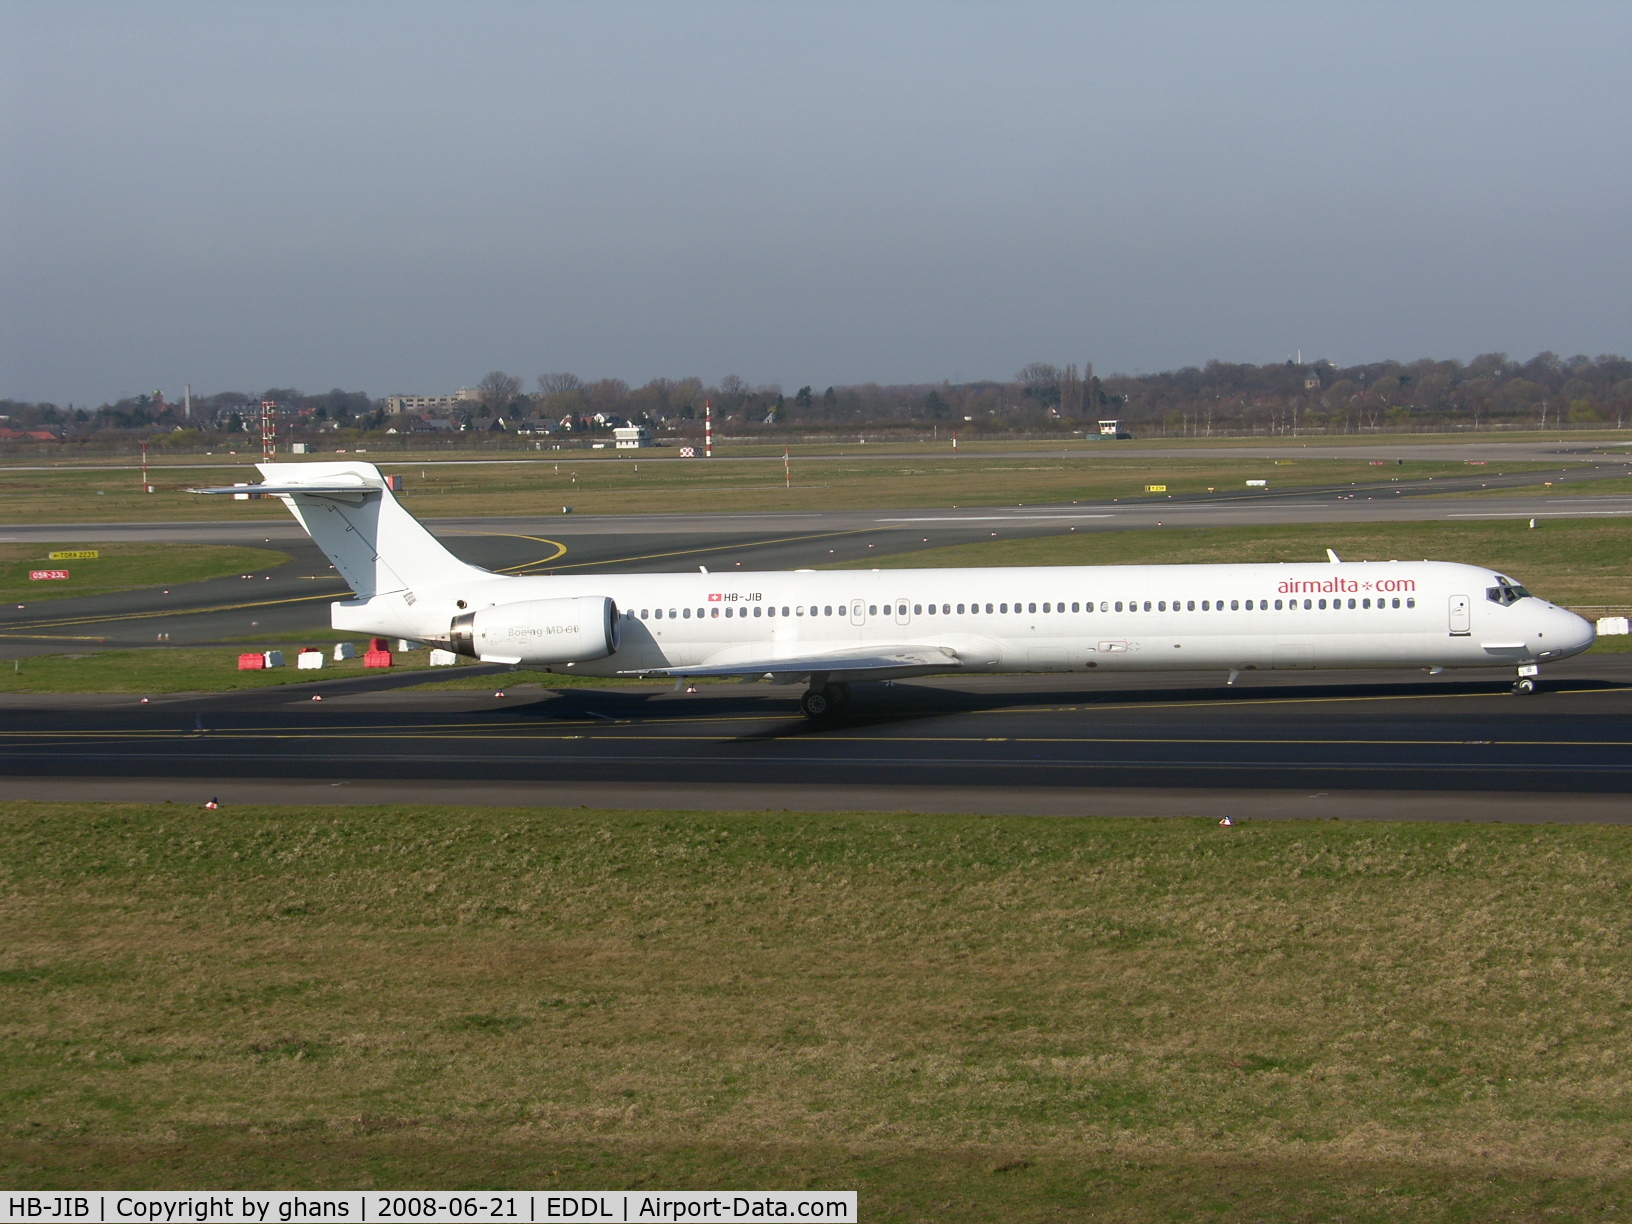 HB-JIB, 1996 McDonnell Douglas MD-90-30 C/N 53553, Hello on lease to Air Malta